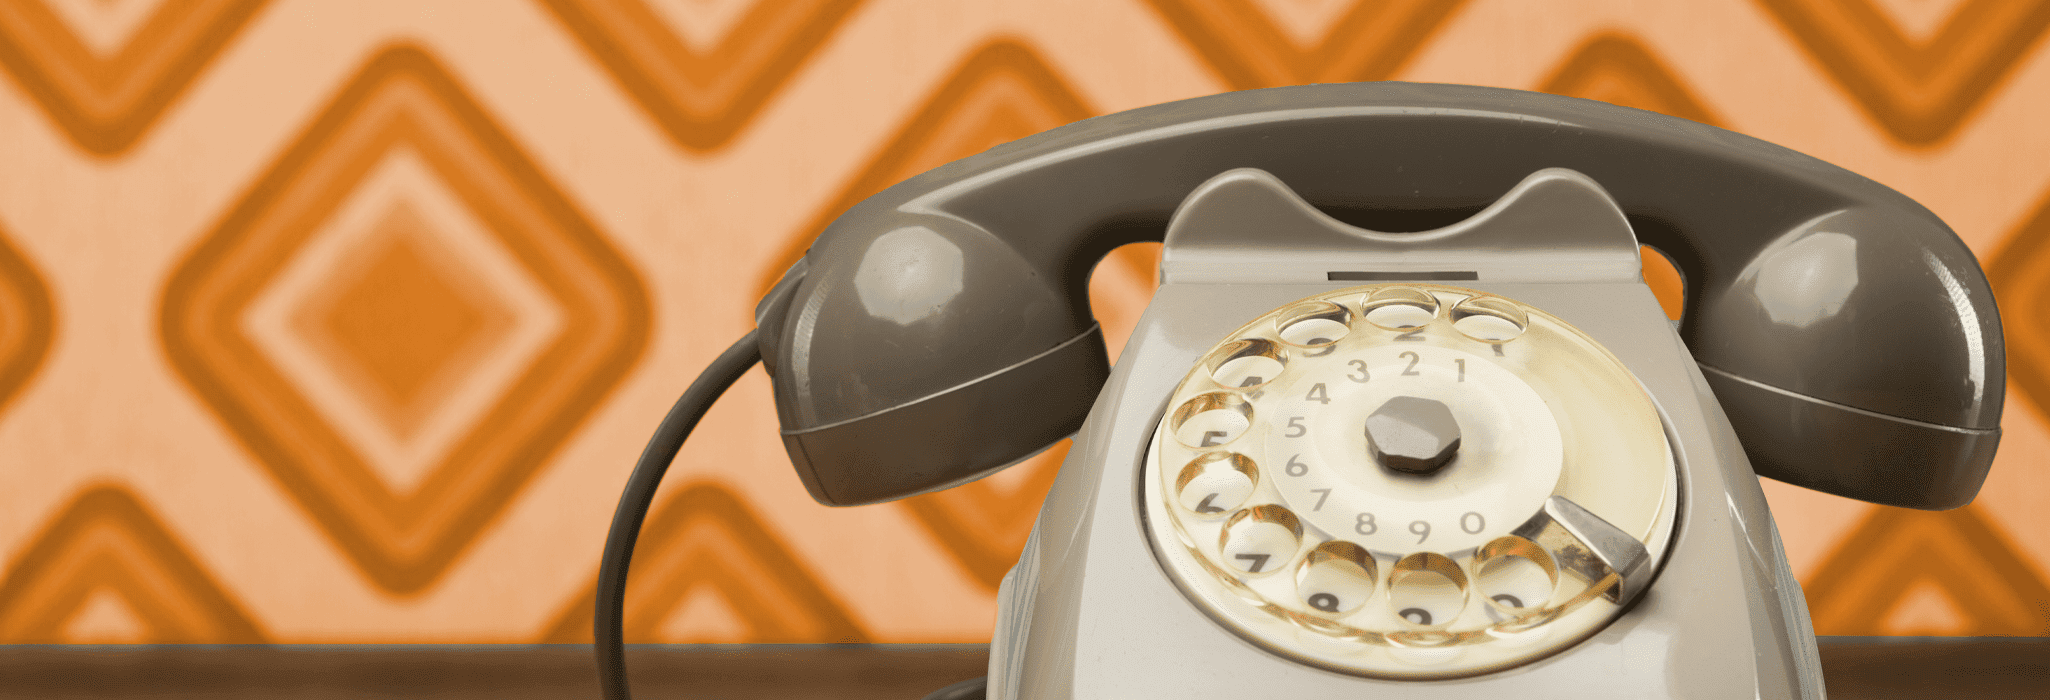 1980s traditional landline telephone